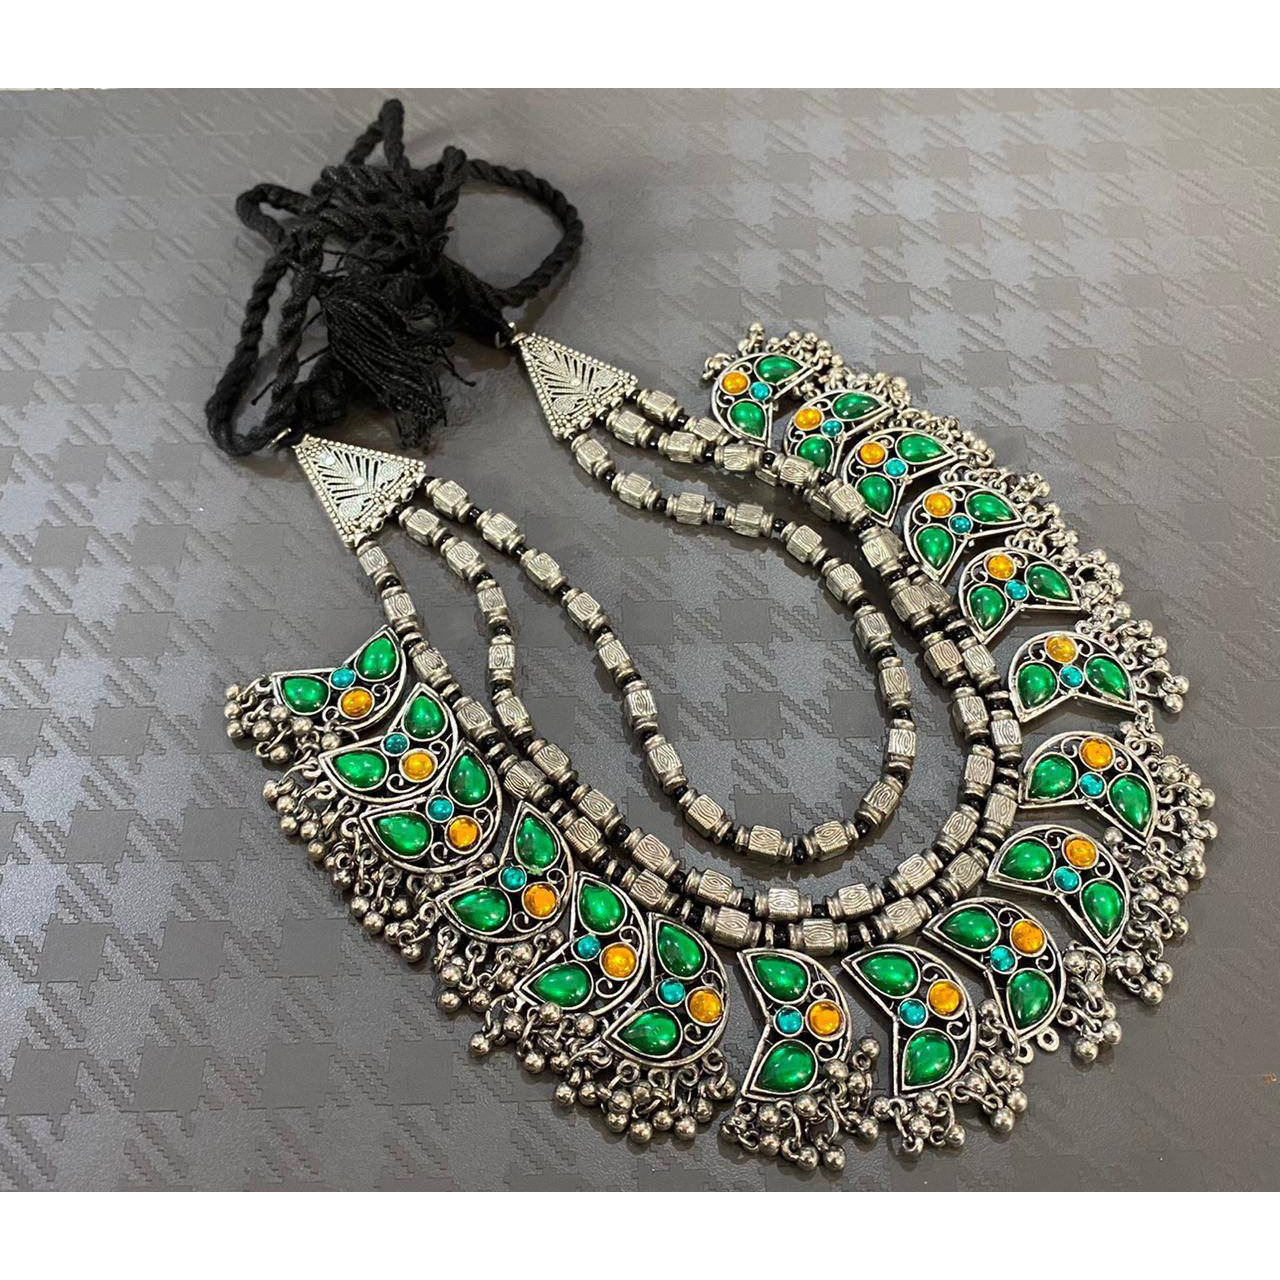 Multilayer necklace, stone jewellery, silver oxidised necklace, jewelry set, German silver set, Indian oxidized set, handmade stone jewelry